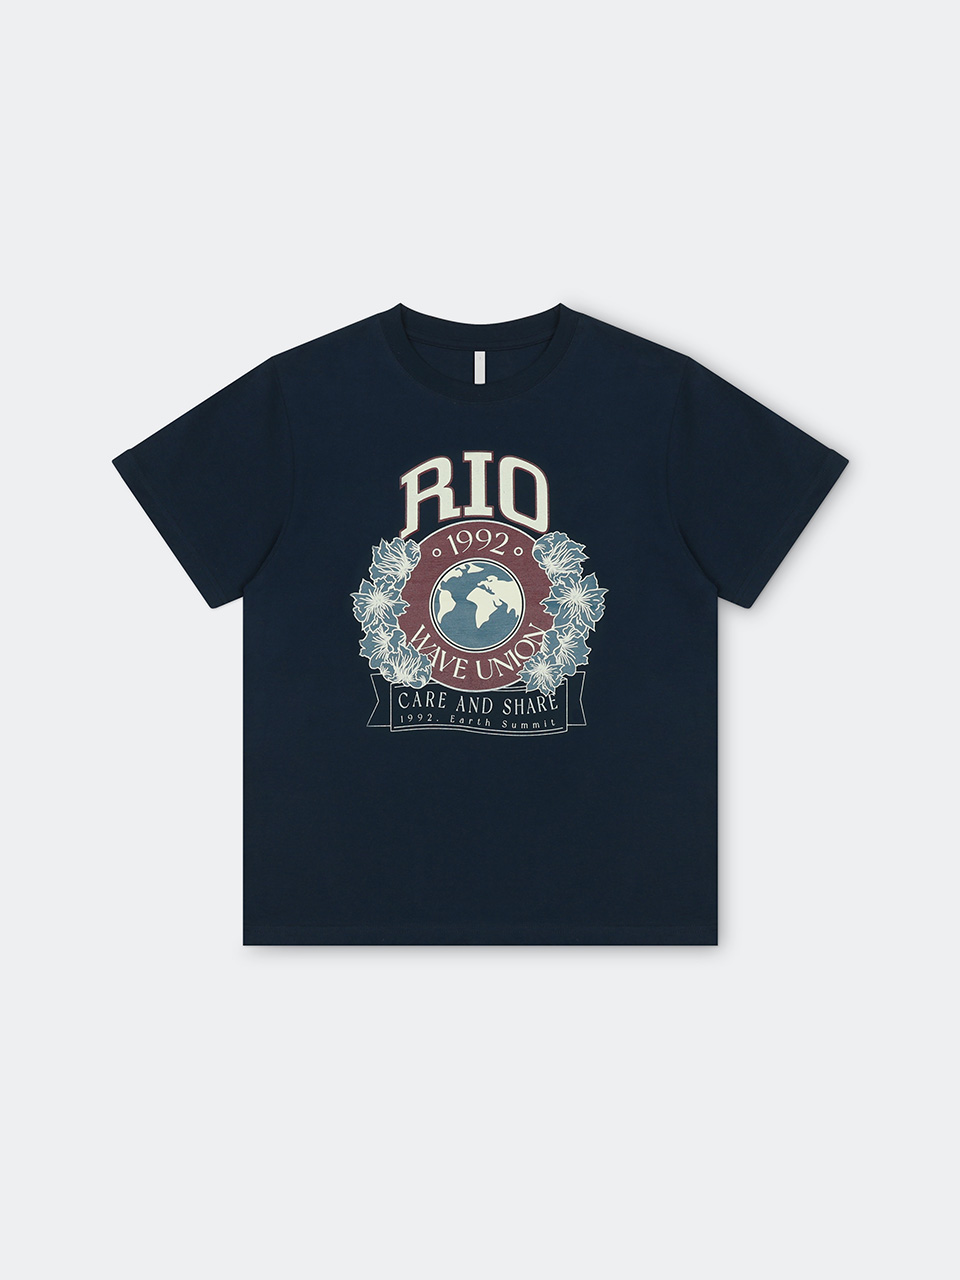 Rio T-shirt navy